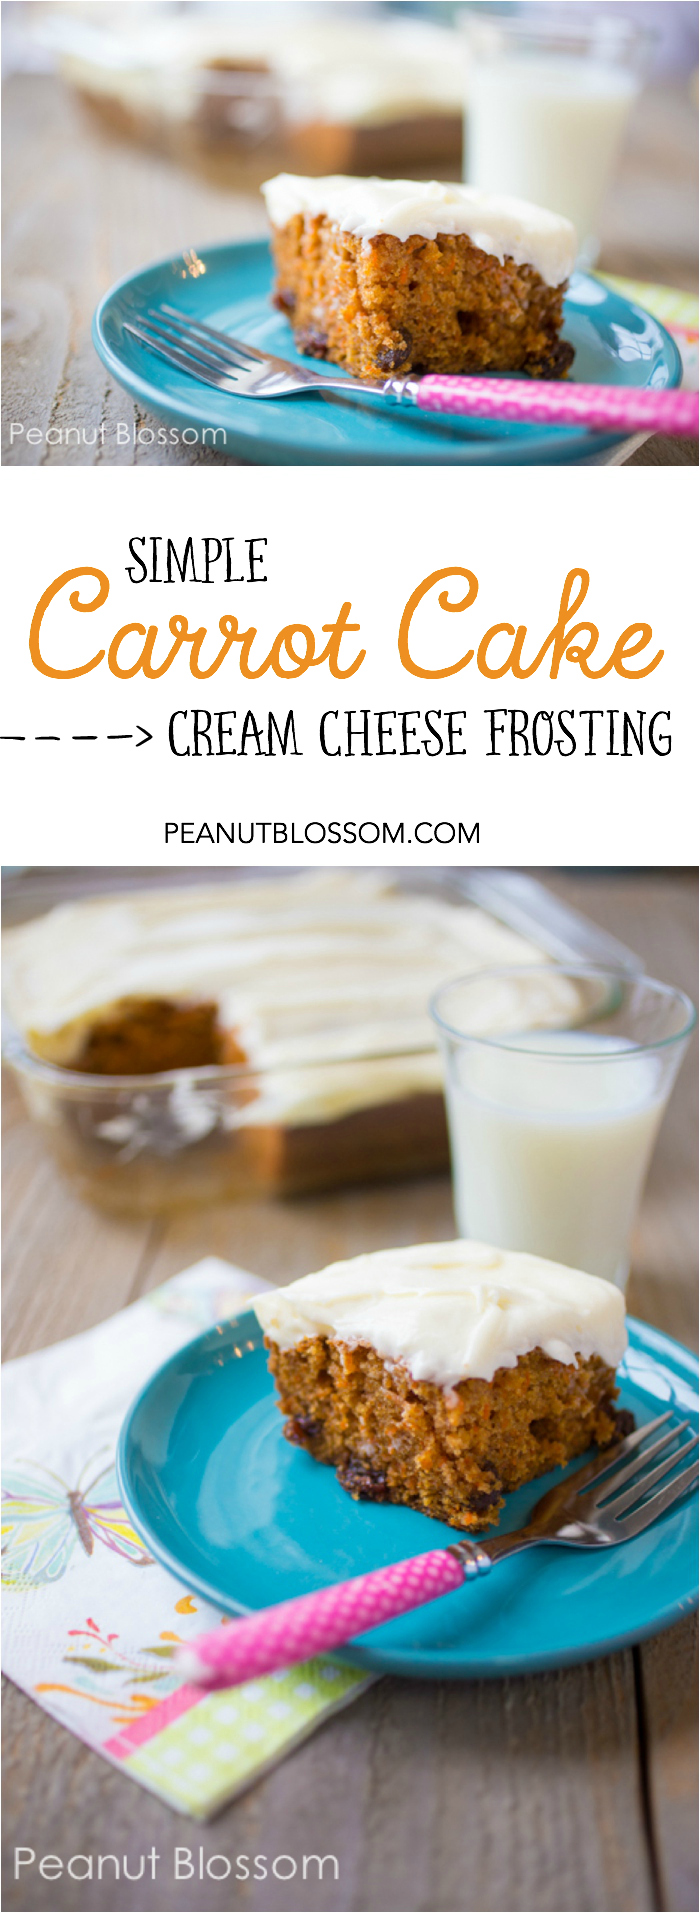 Easy cream cheese carrot cake recipe for Easter